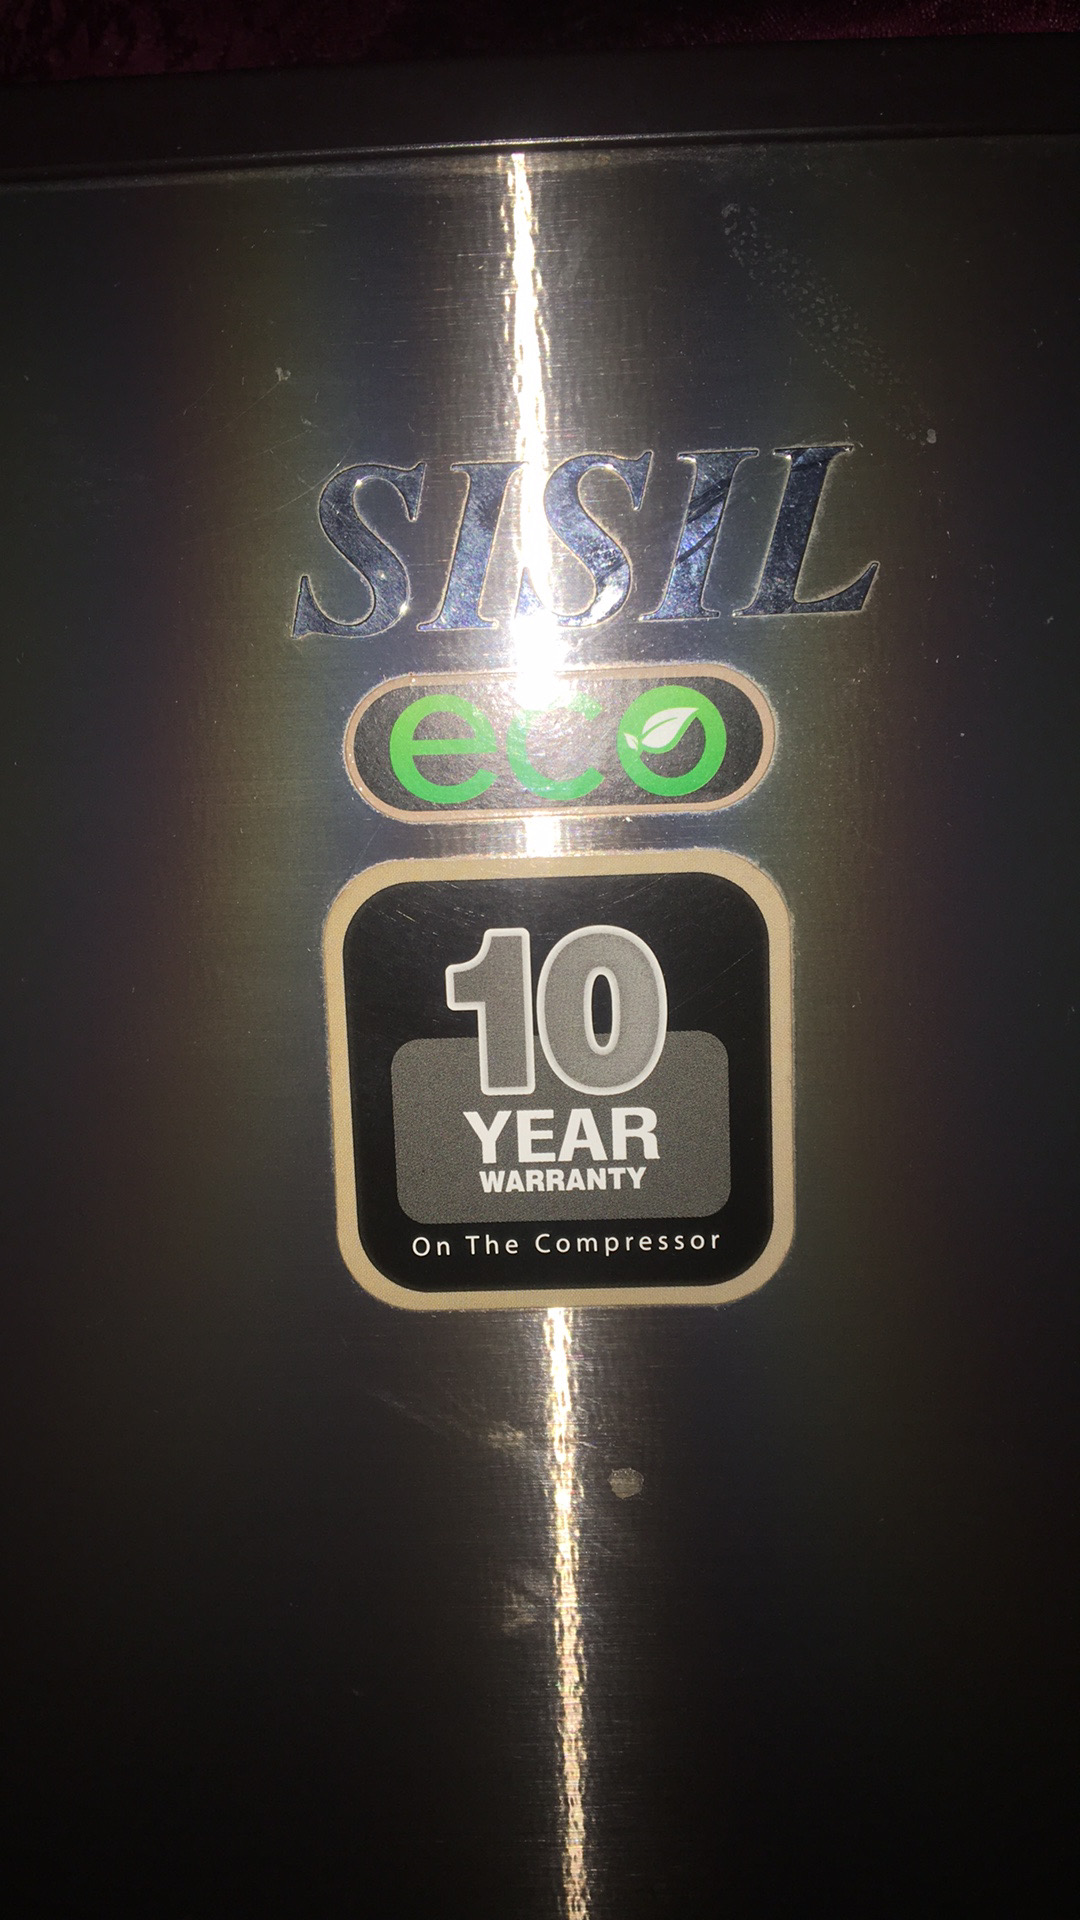 Refrigerator Sisil 192/192Wr